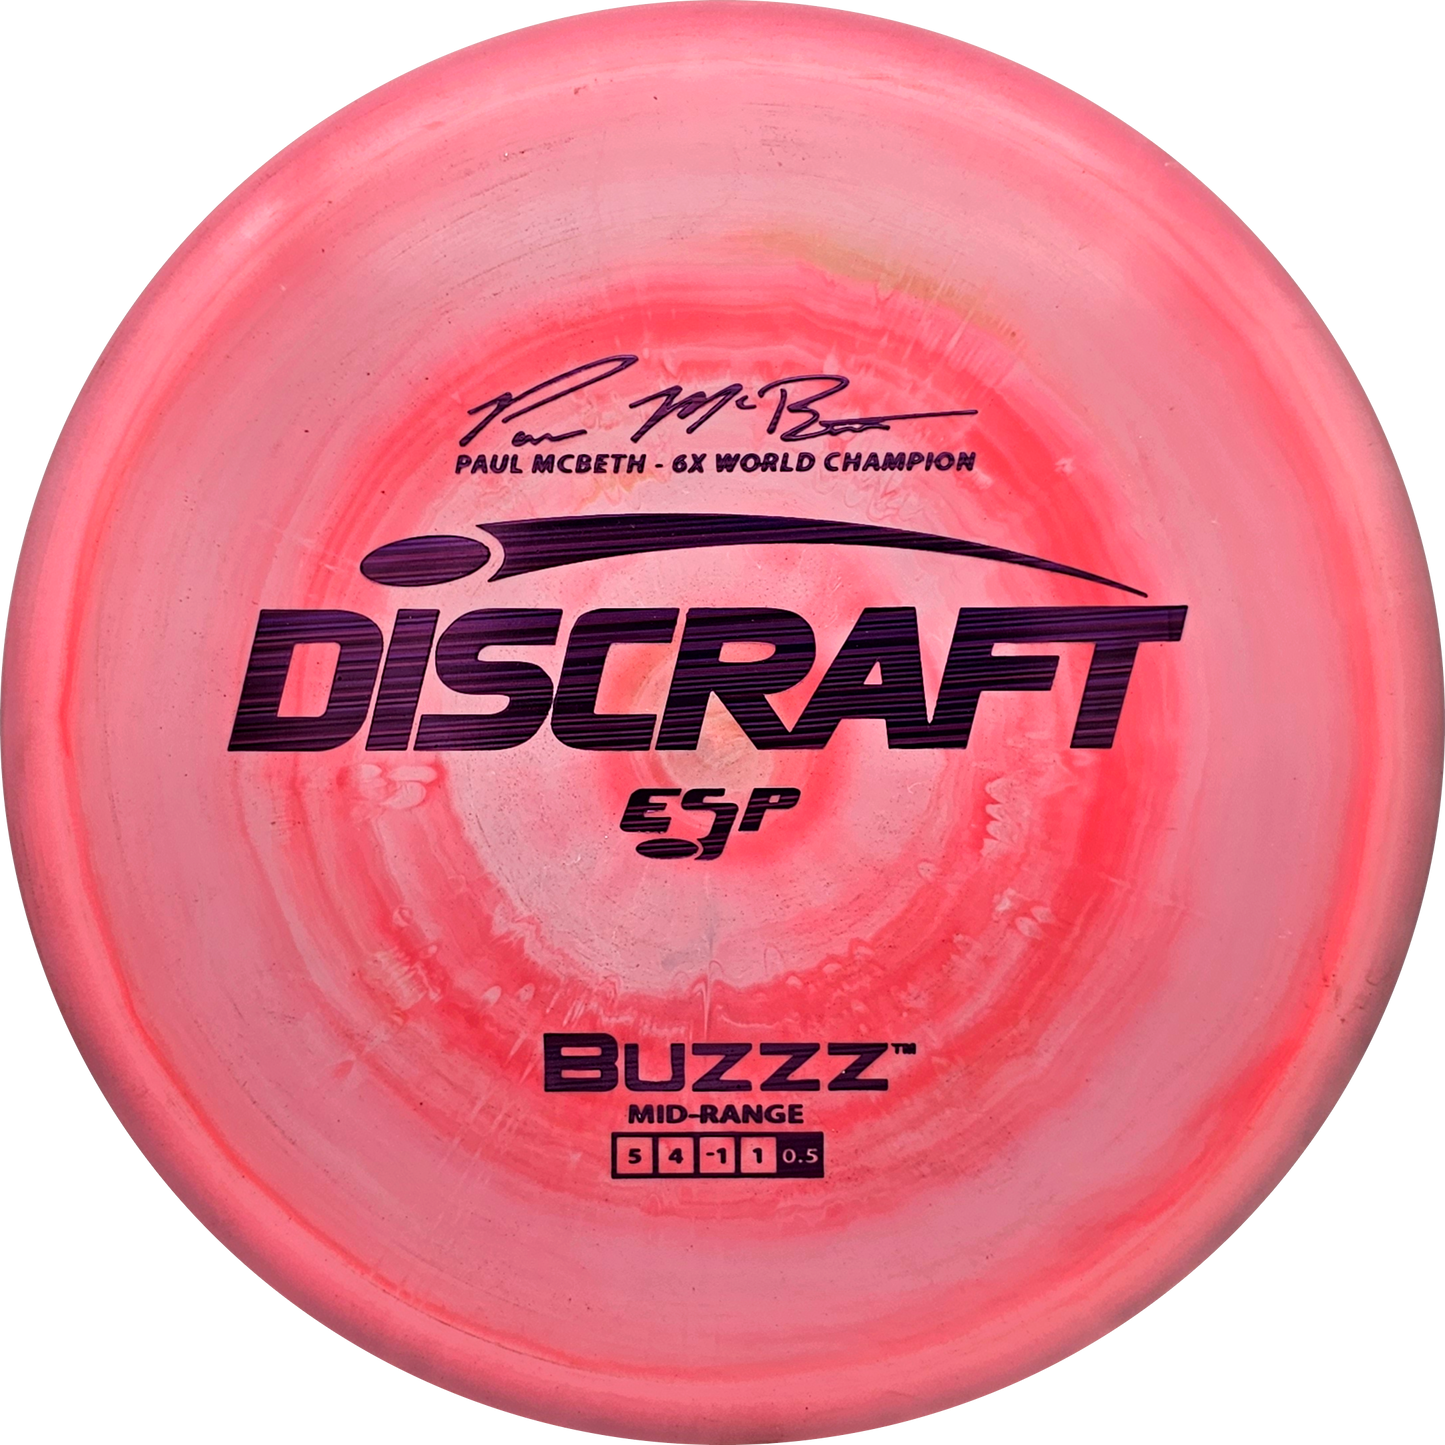 Discraft ESP Buzzz - Paul McBeth 6X Signature Series